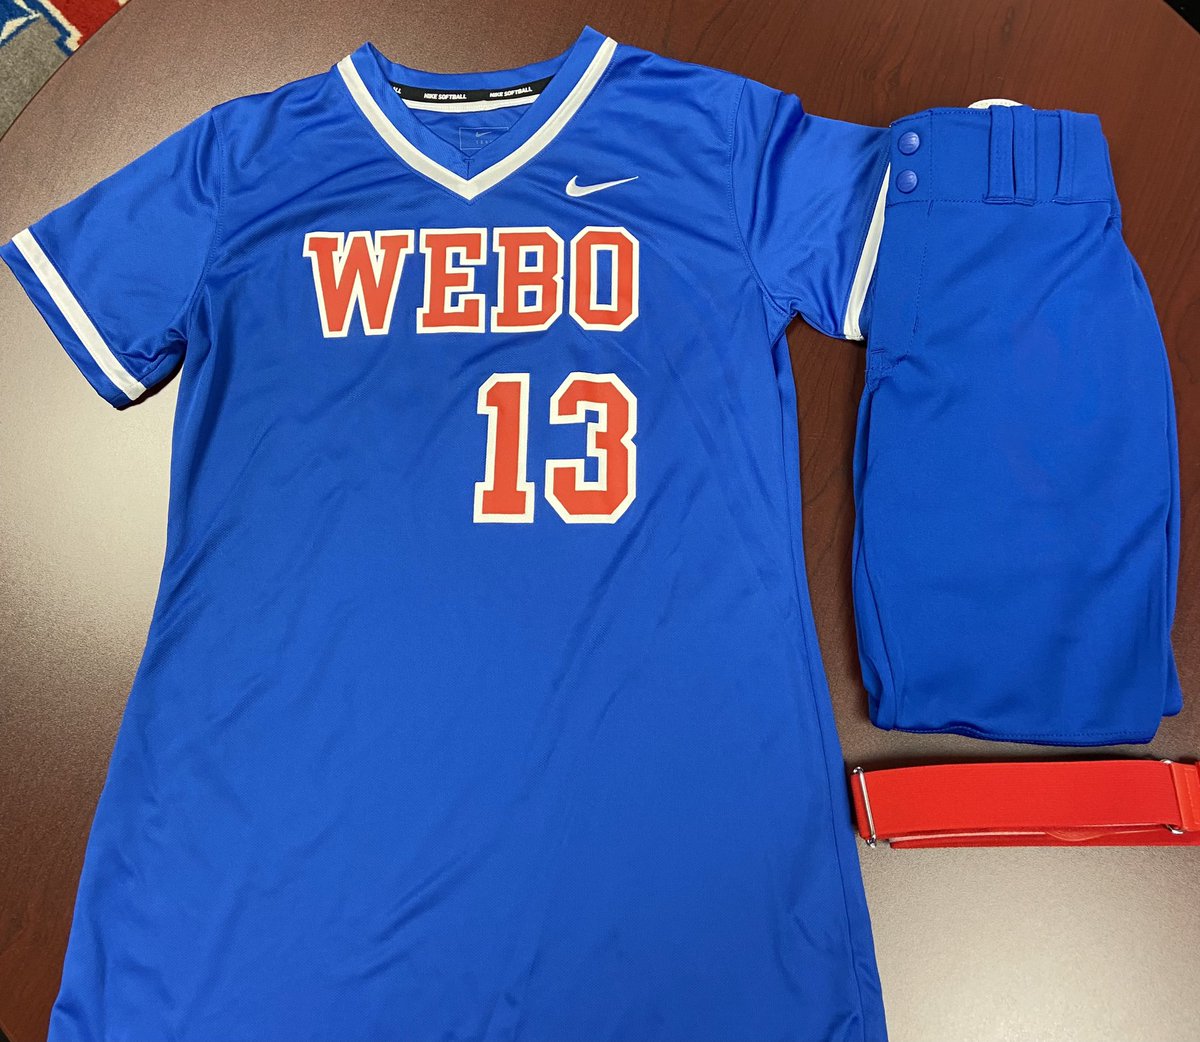 New @WBstarsSoftball jerseys have arrived!